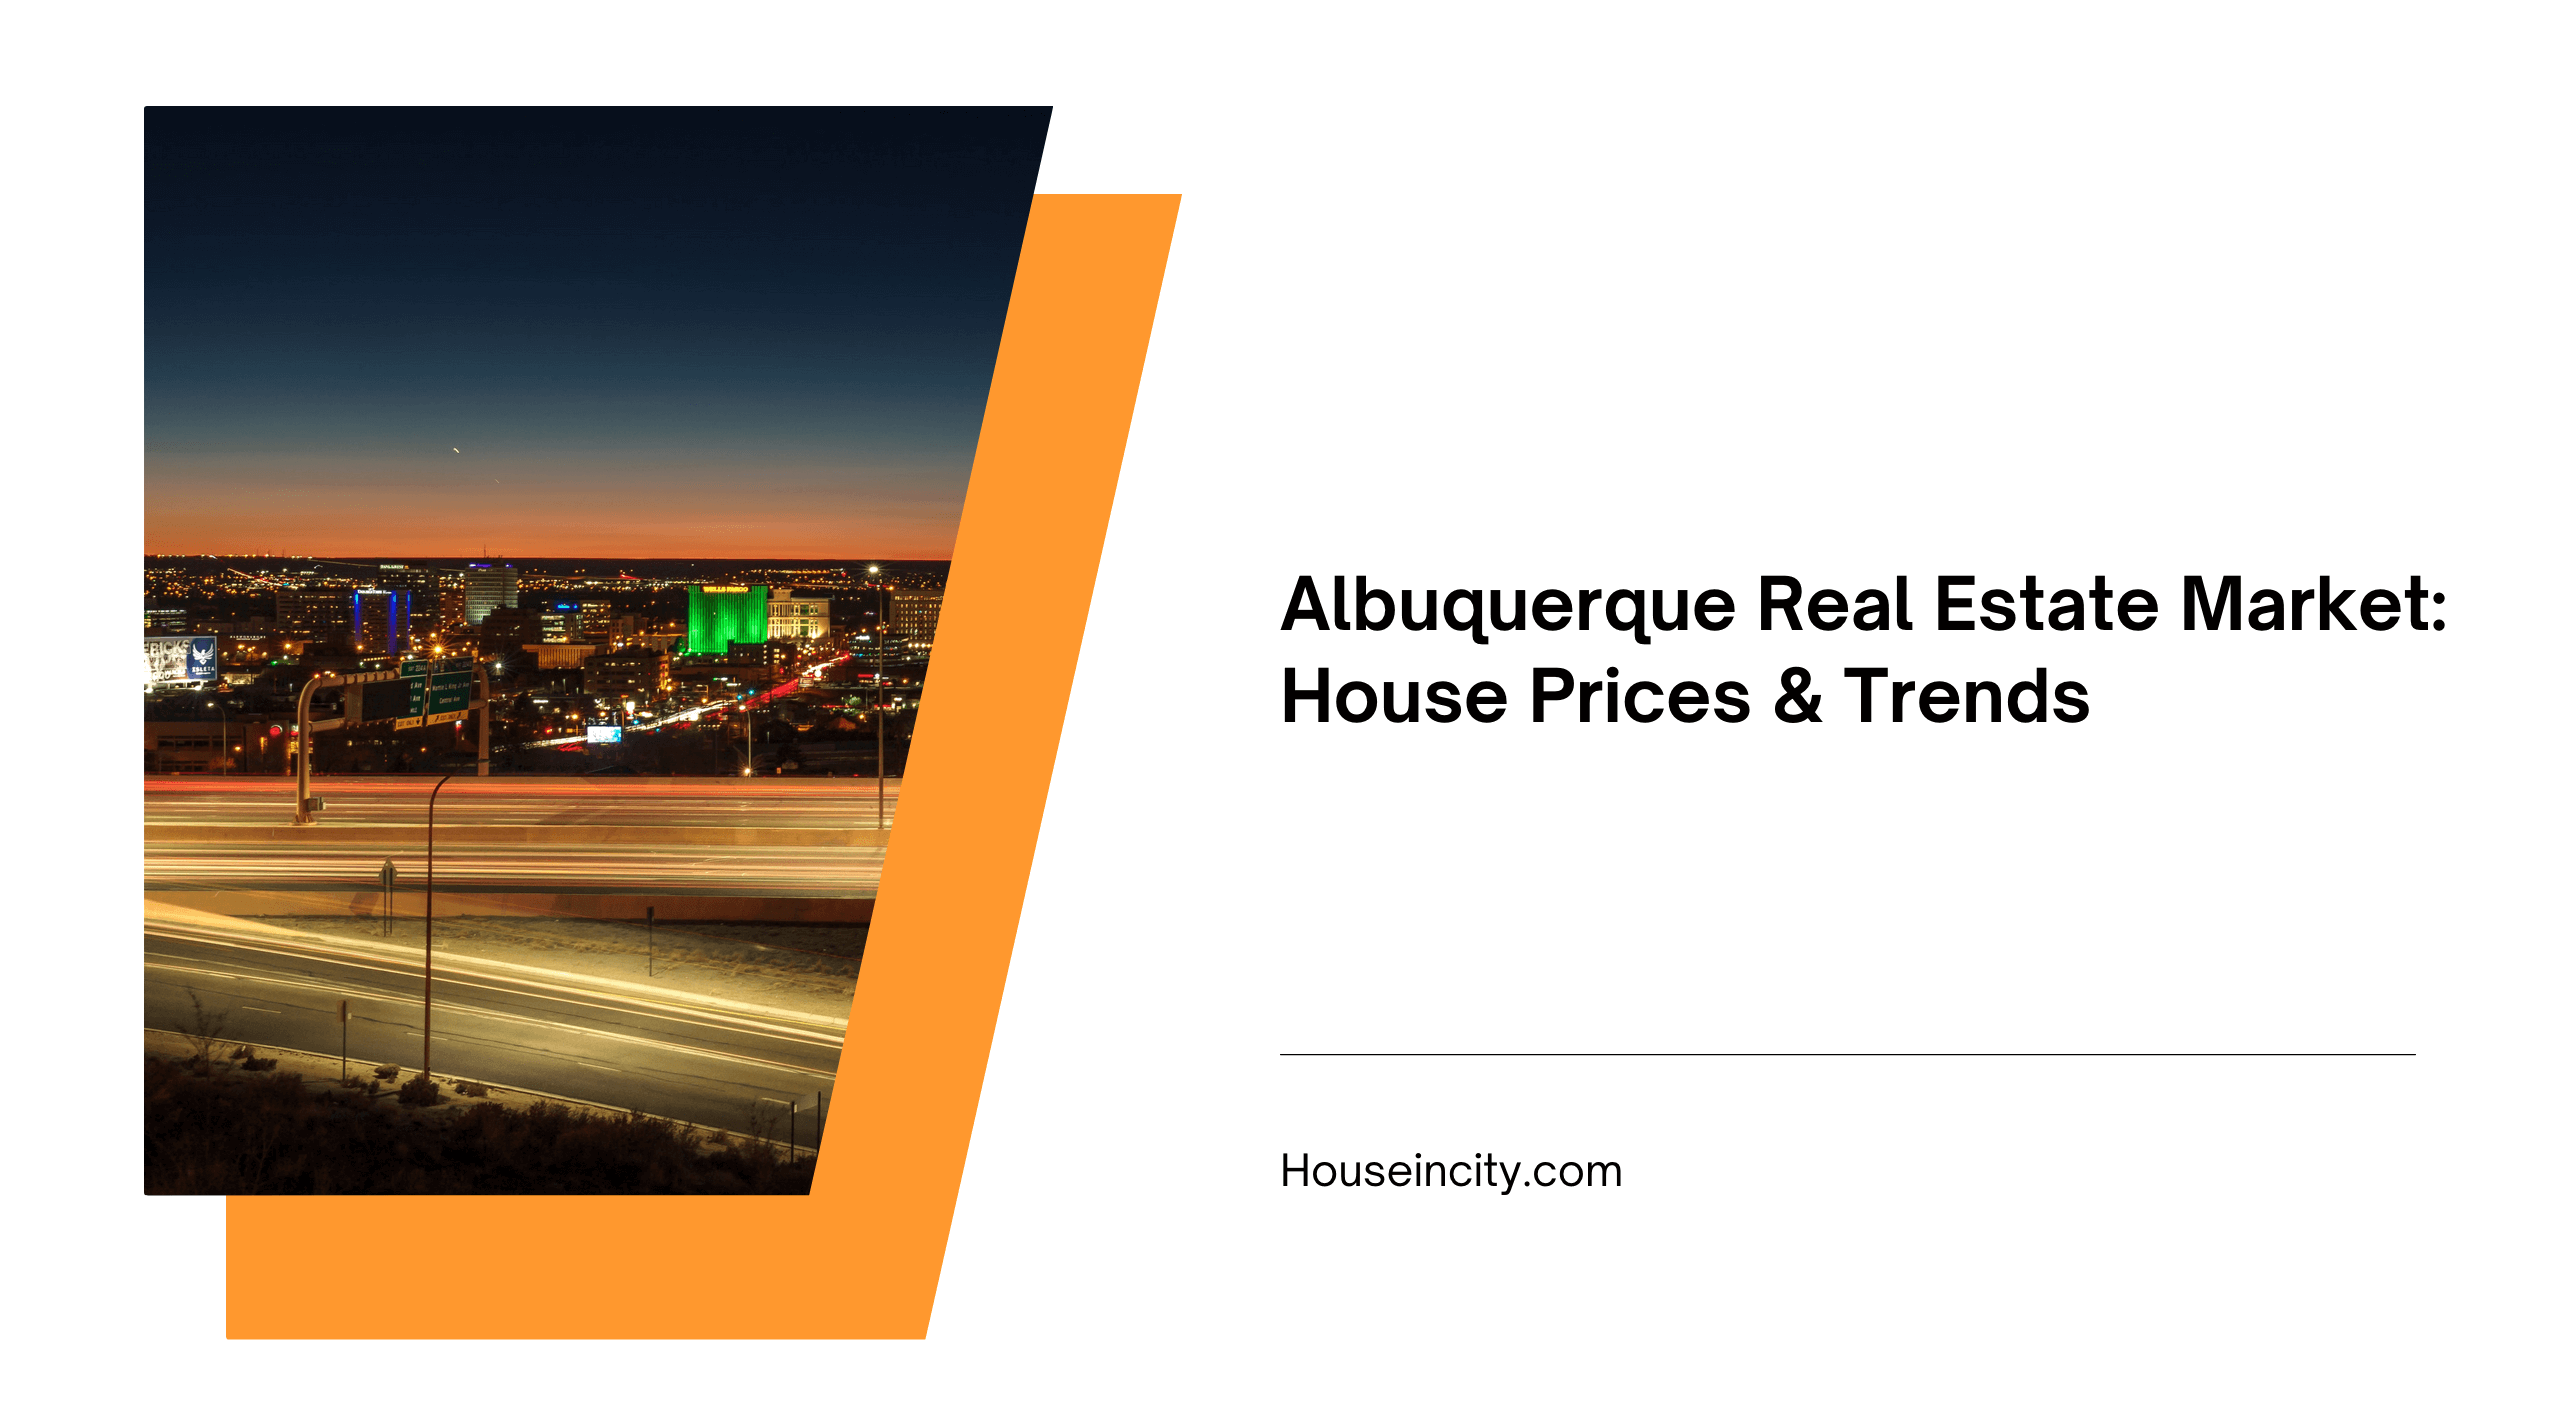 Albuquerque Real Estate Market: House Prices & Trends